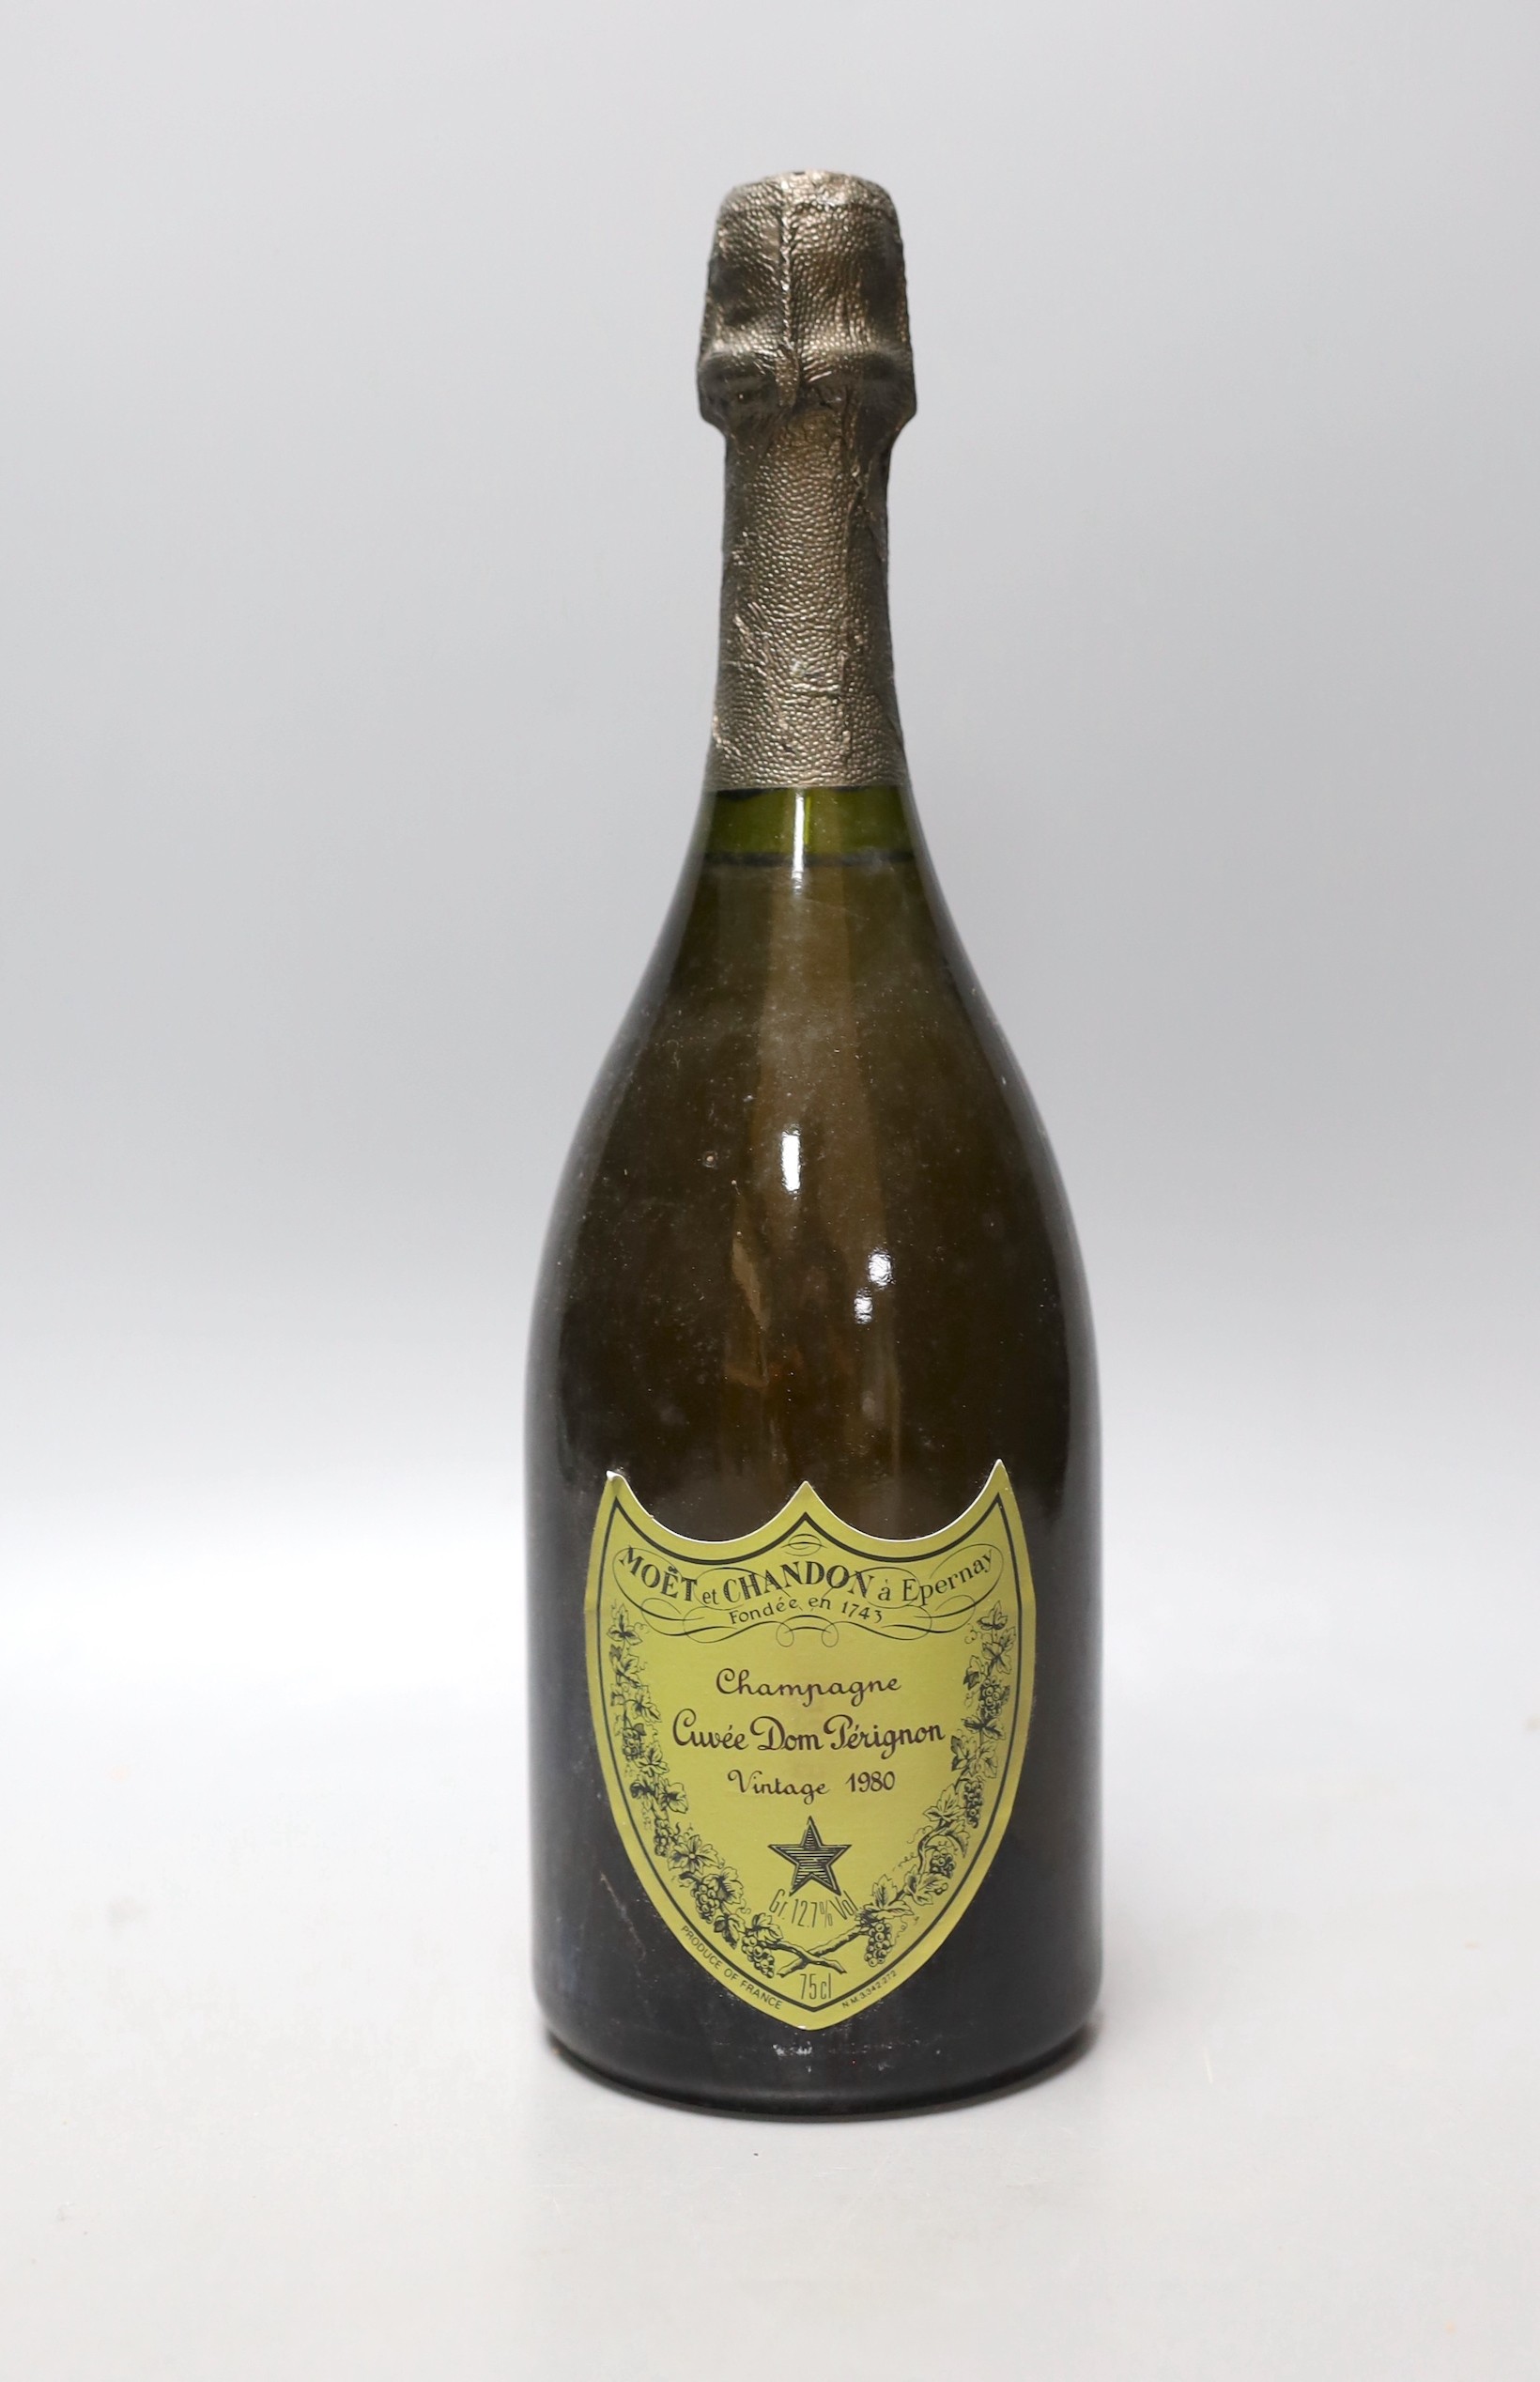 A single bottle of Dom Perignon champagne, 1980 vintage